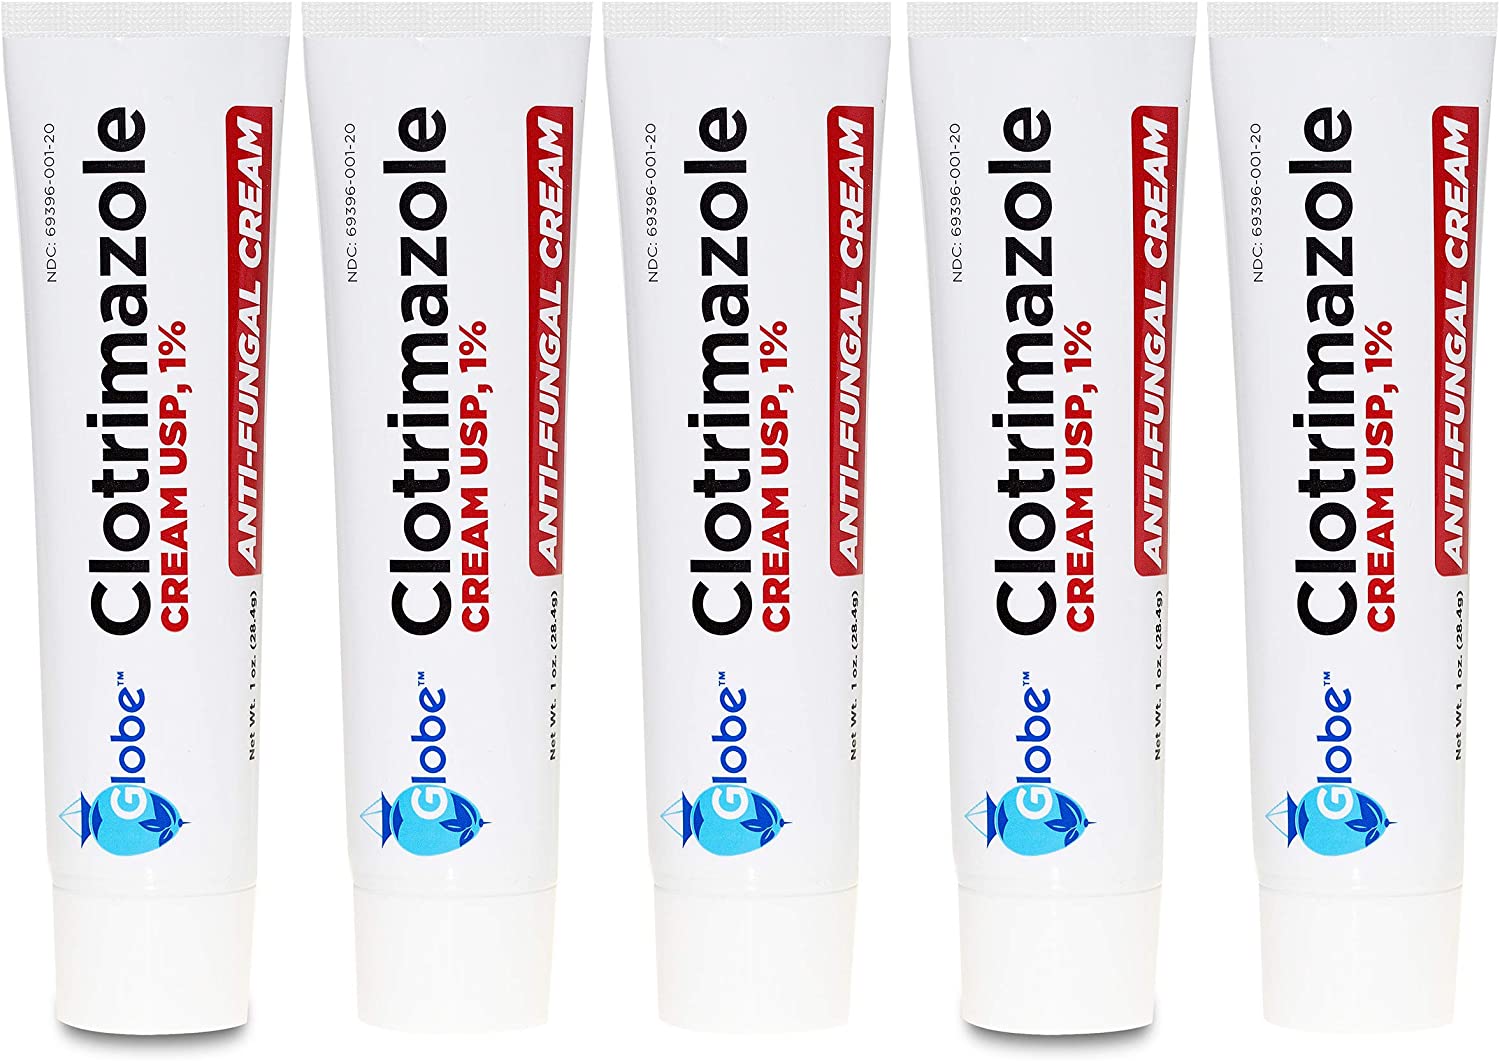 Globe Clotrimazole Jock Itch Relief Antifungal Cream, 5-Pack